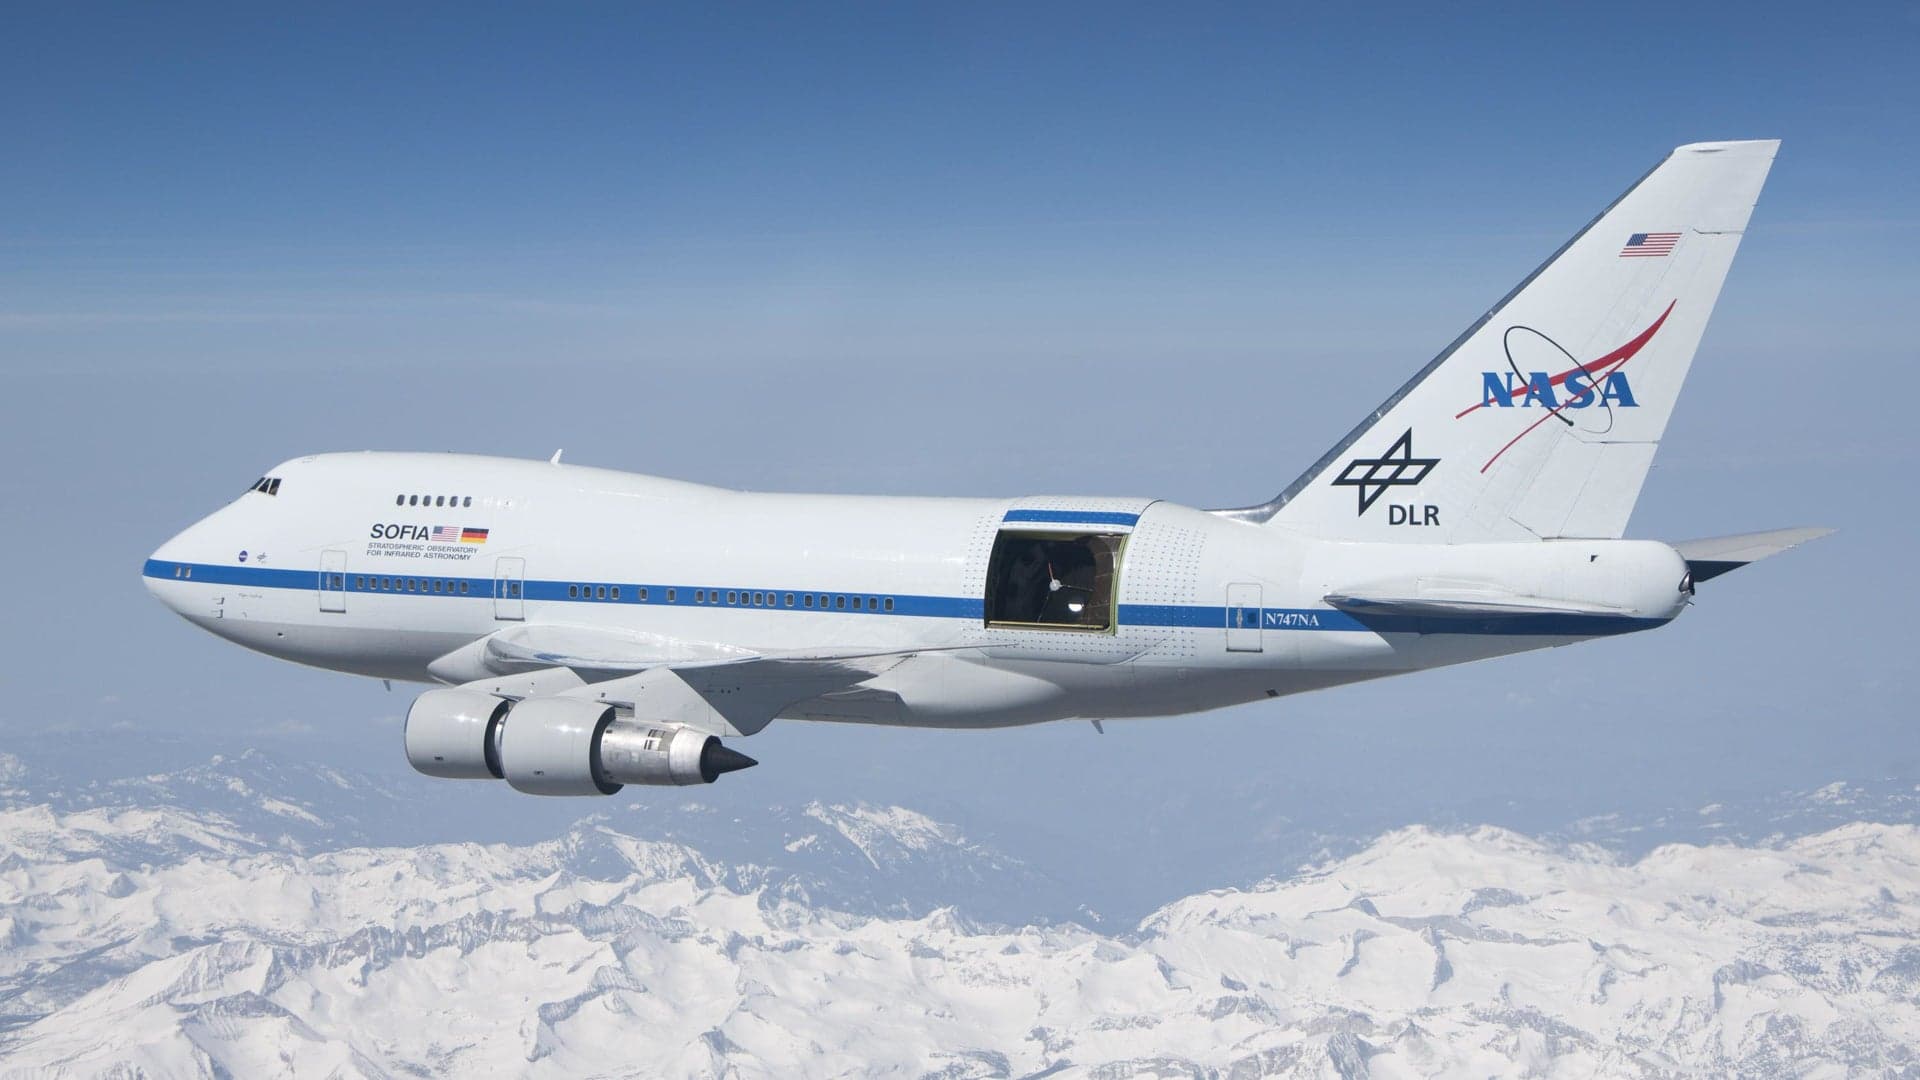 NASA’s Boeing 747-Based Flying Telescope SOFIA Is Being Retired